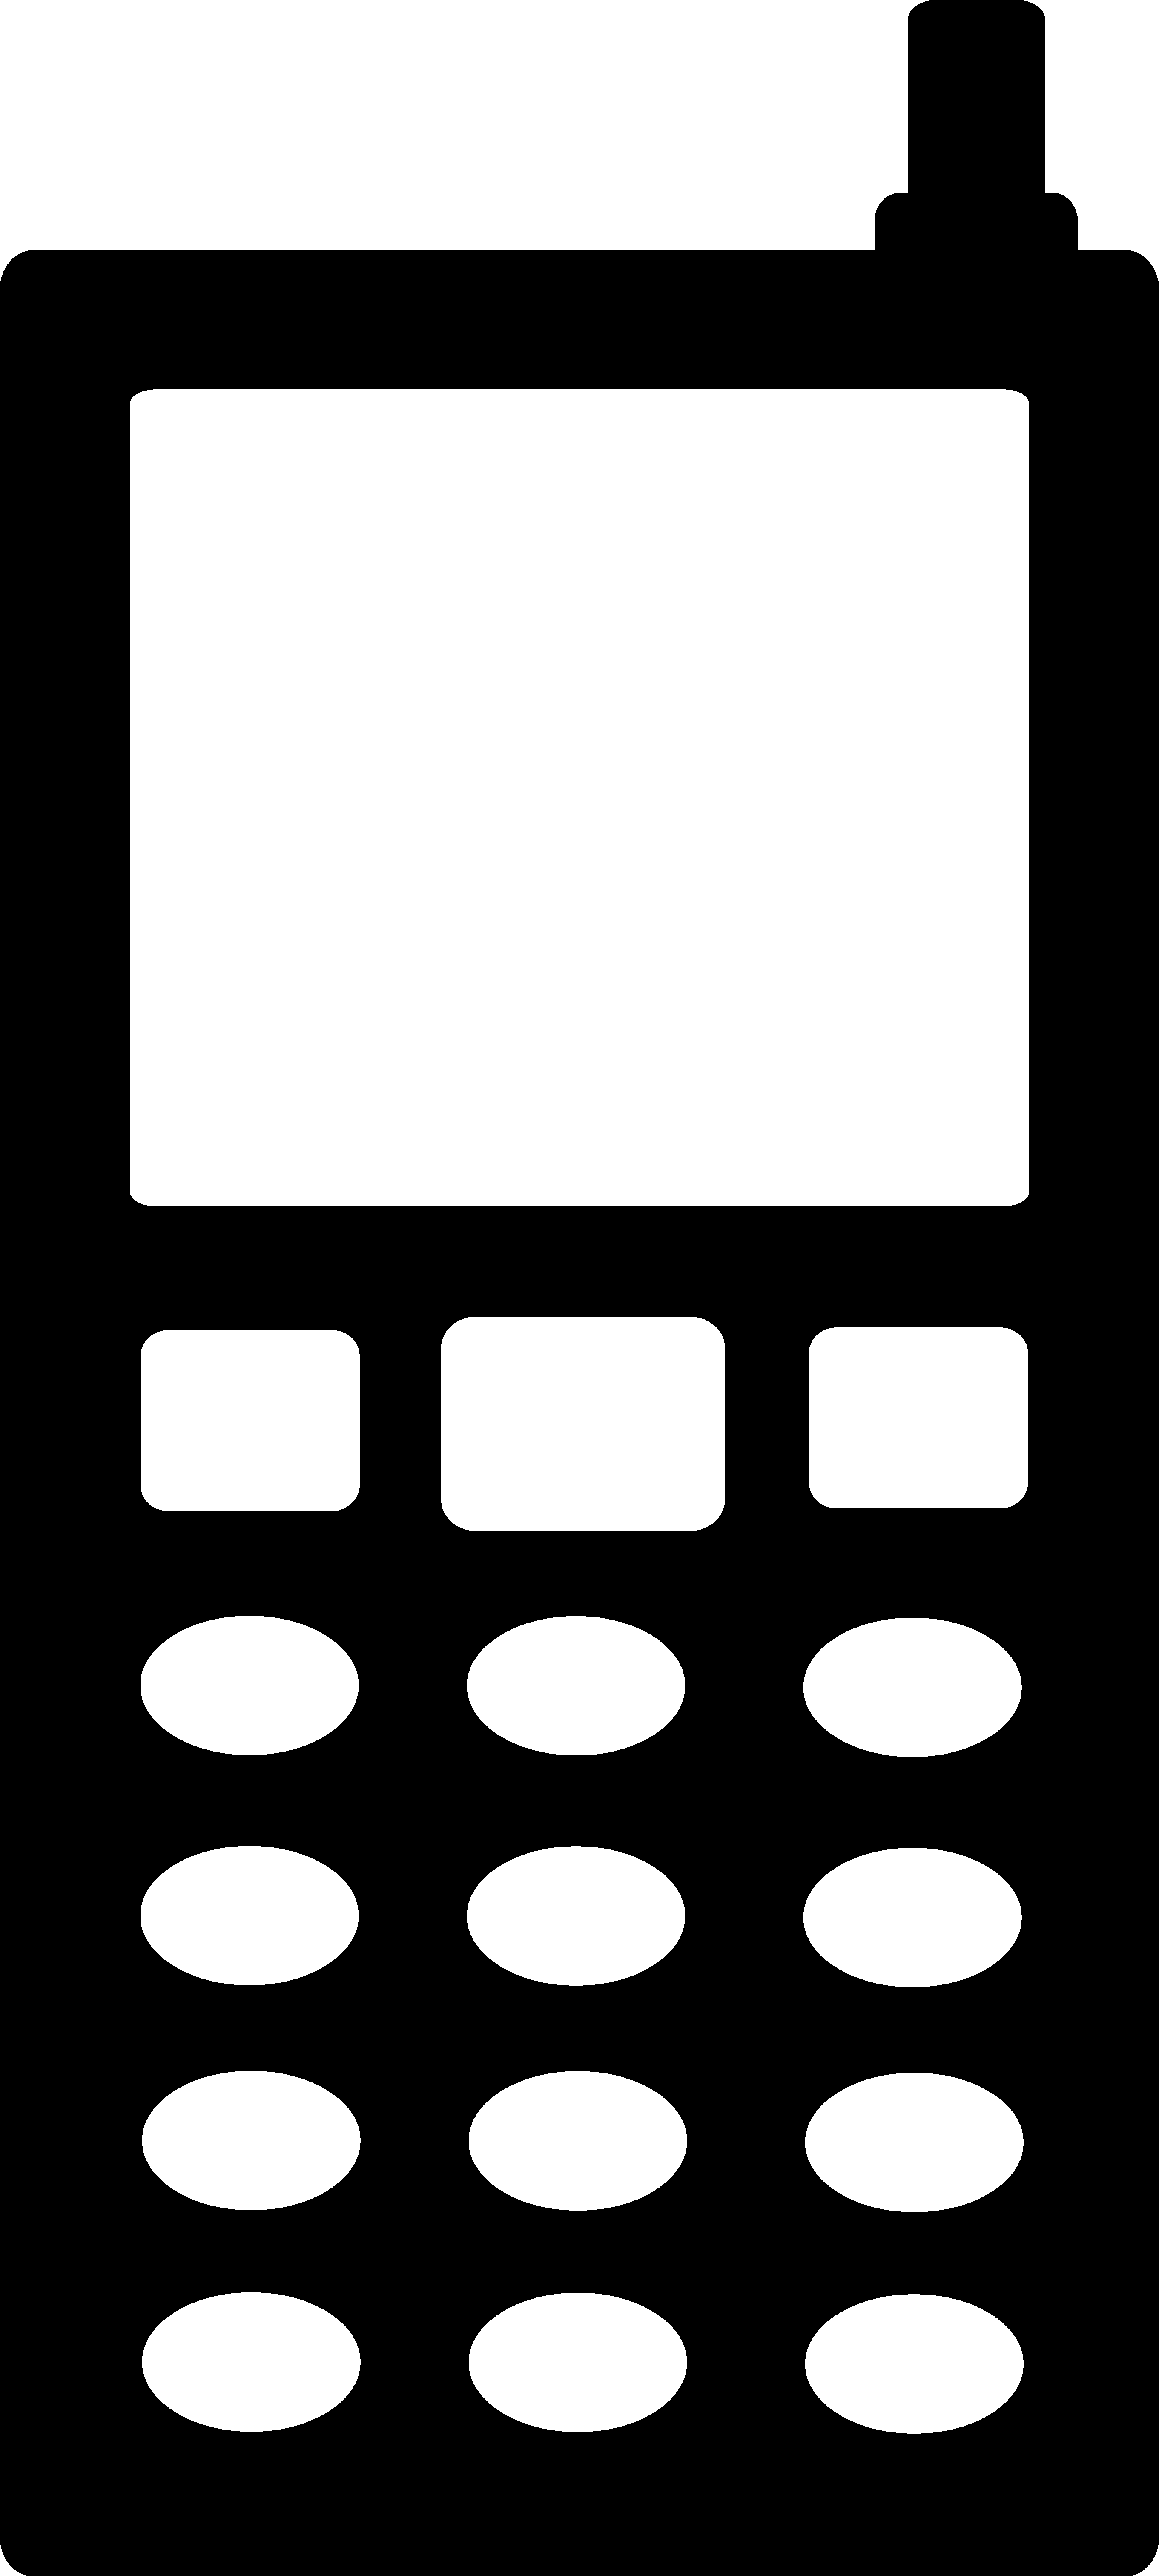 Clipart phone symbol - ClipartFox